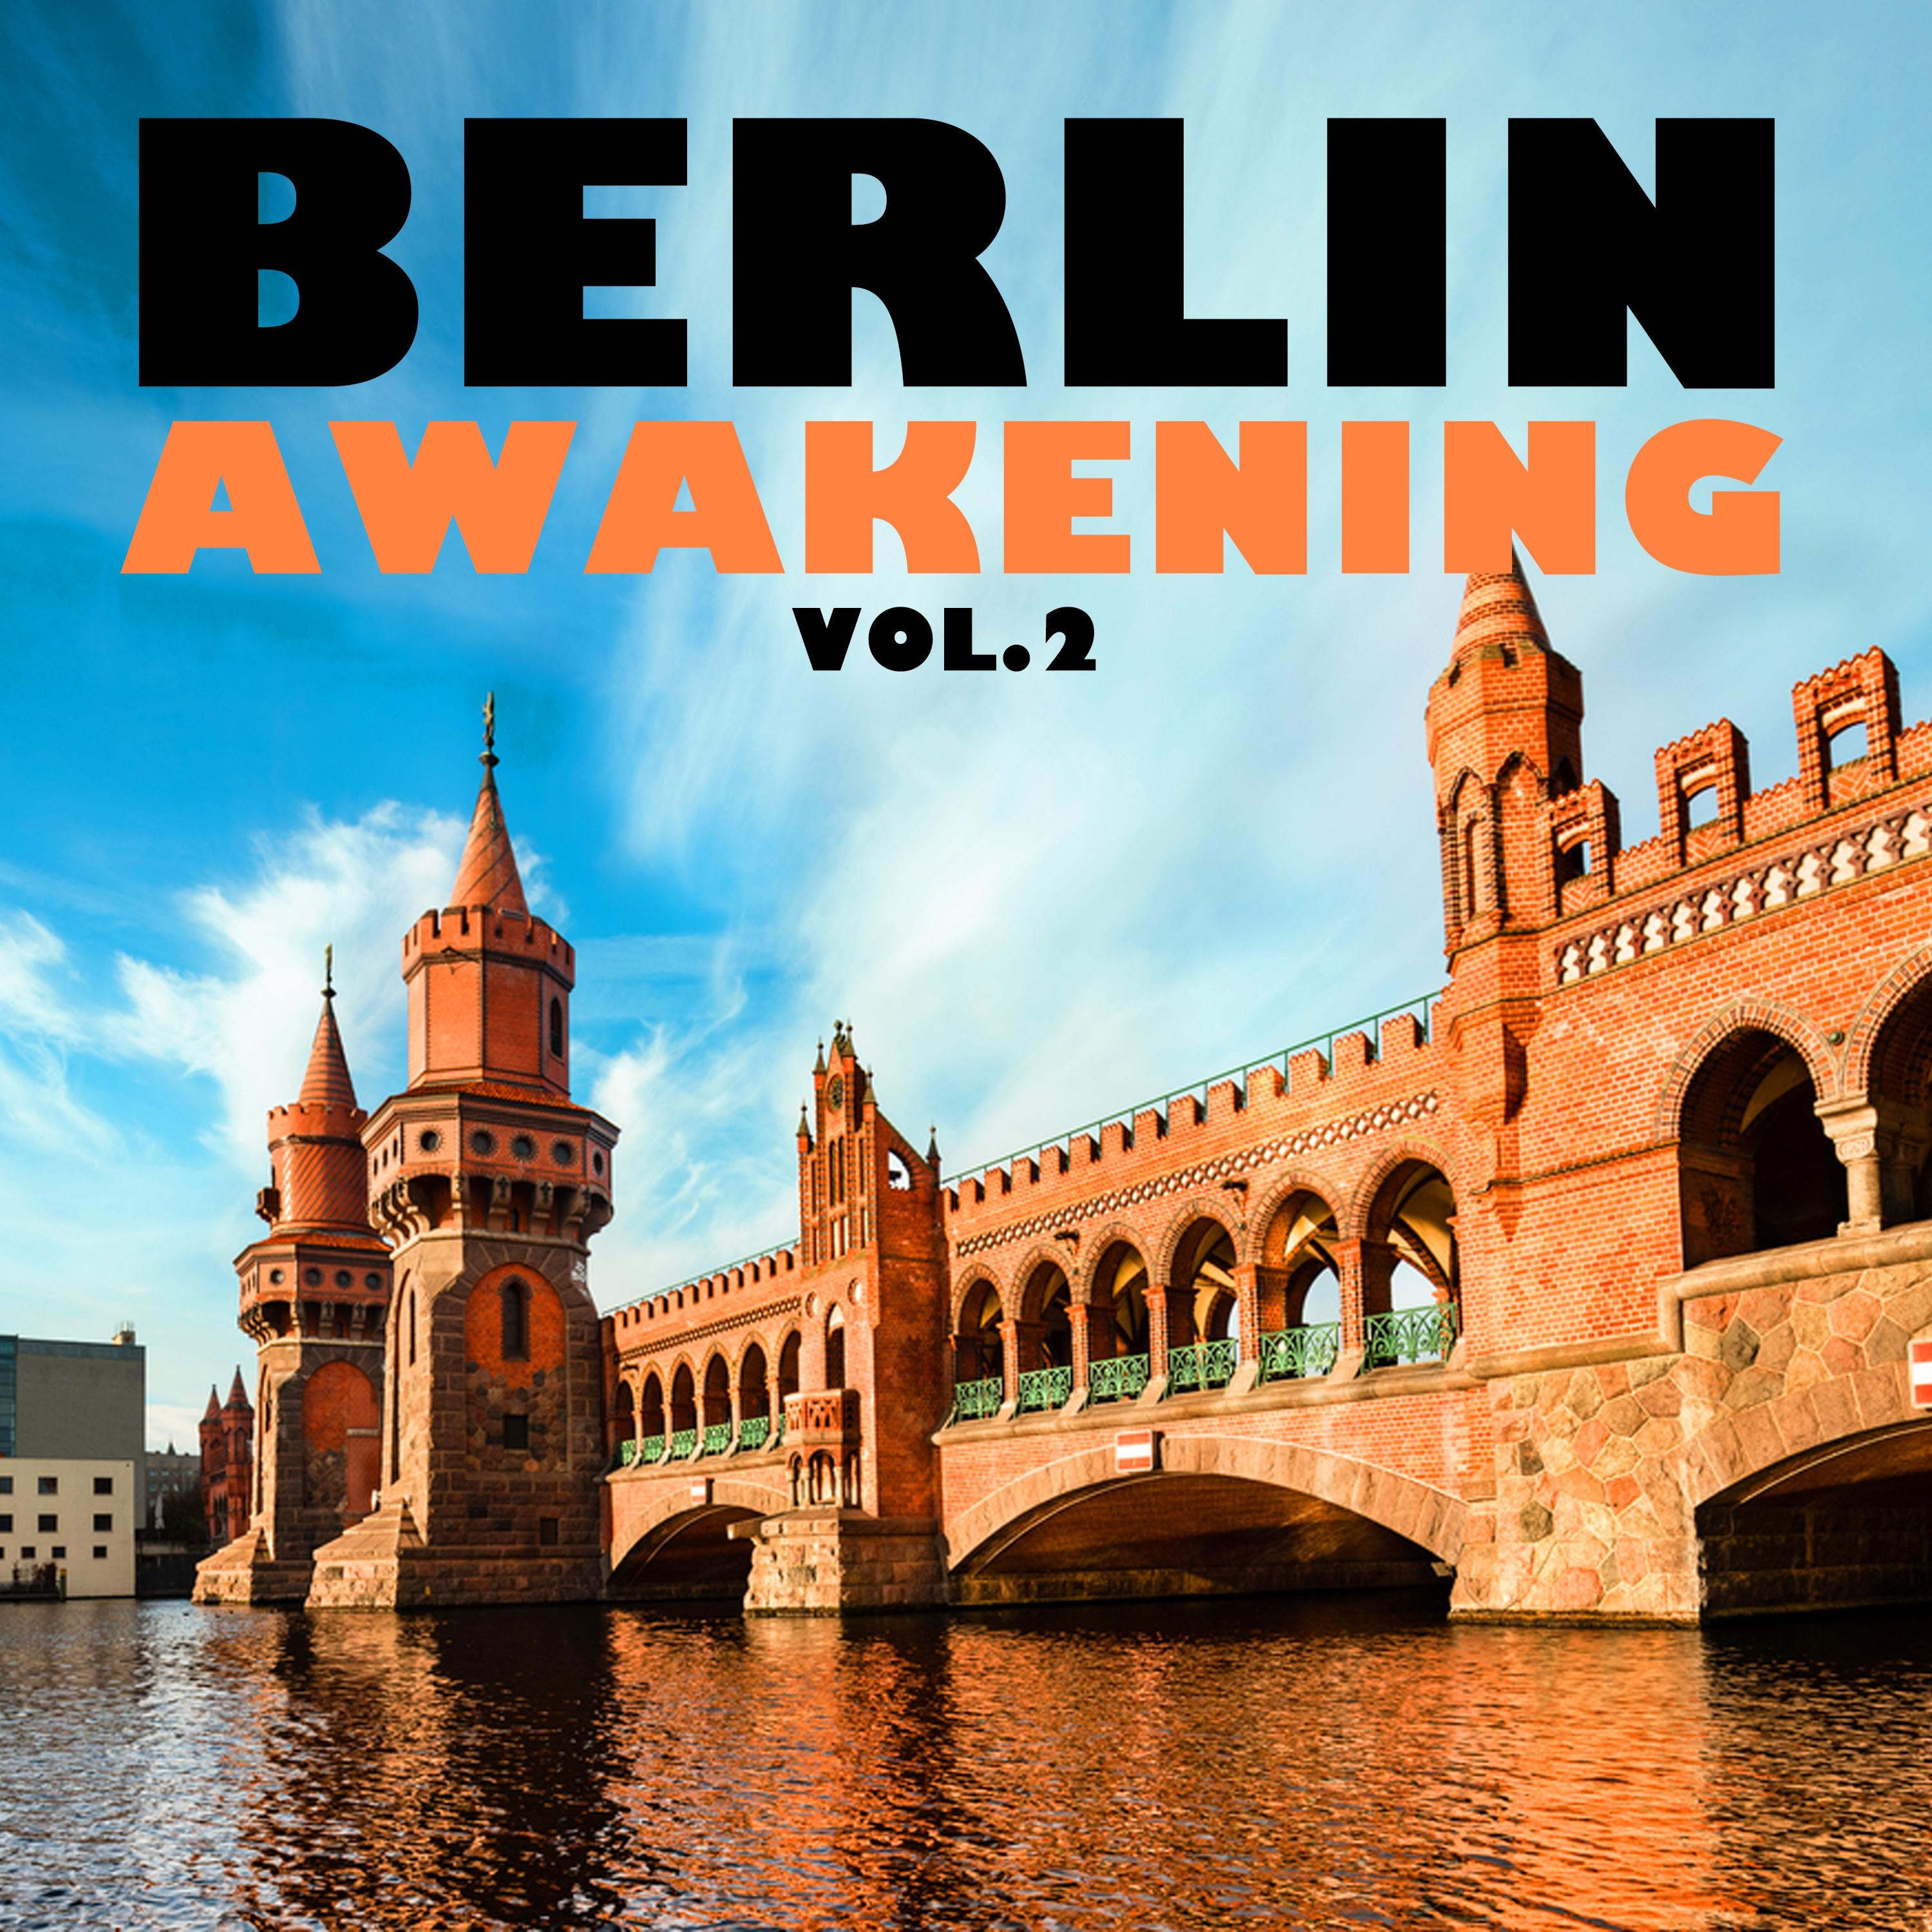 Berlin Awakening, Vol. 2